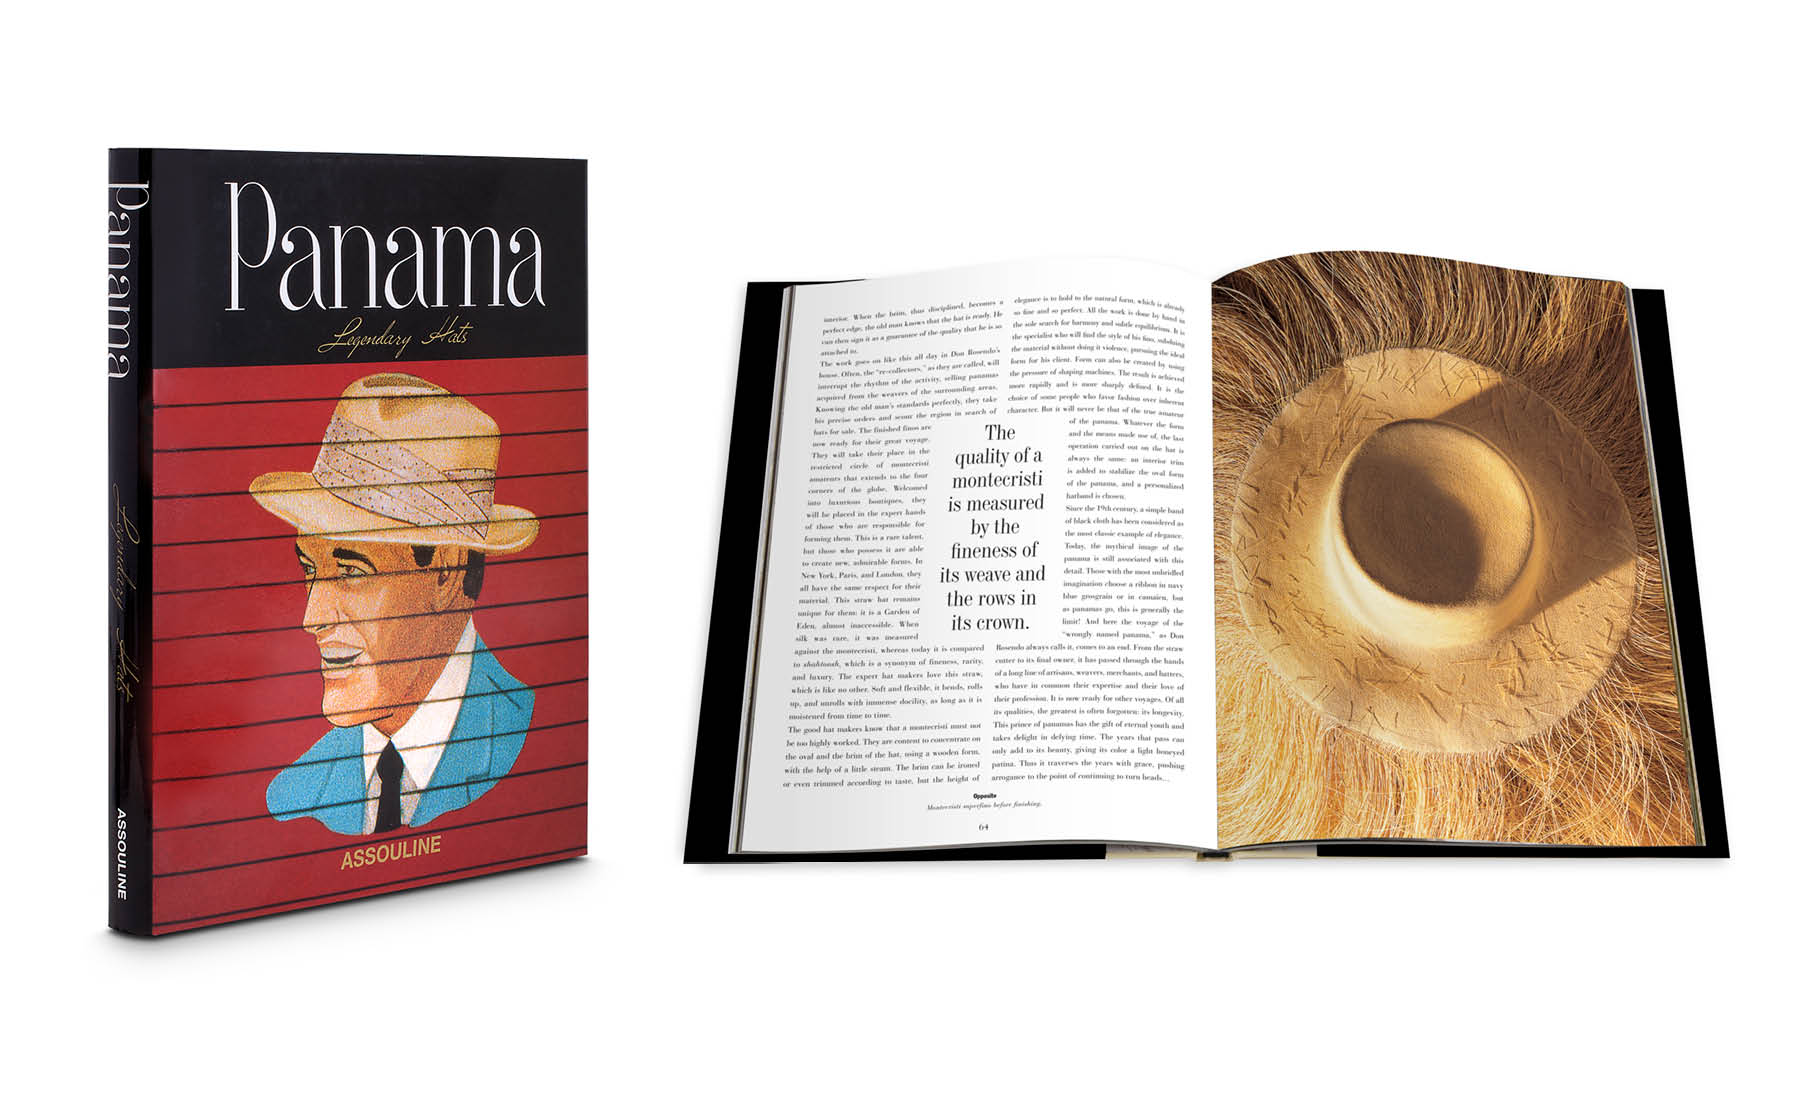 Panama: Legendary Hats – BRAND NEW book in